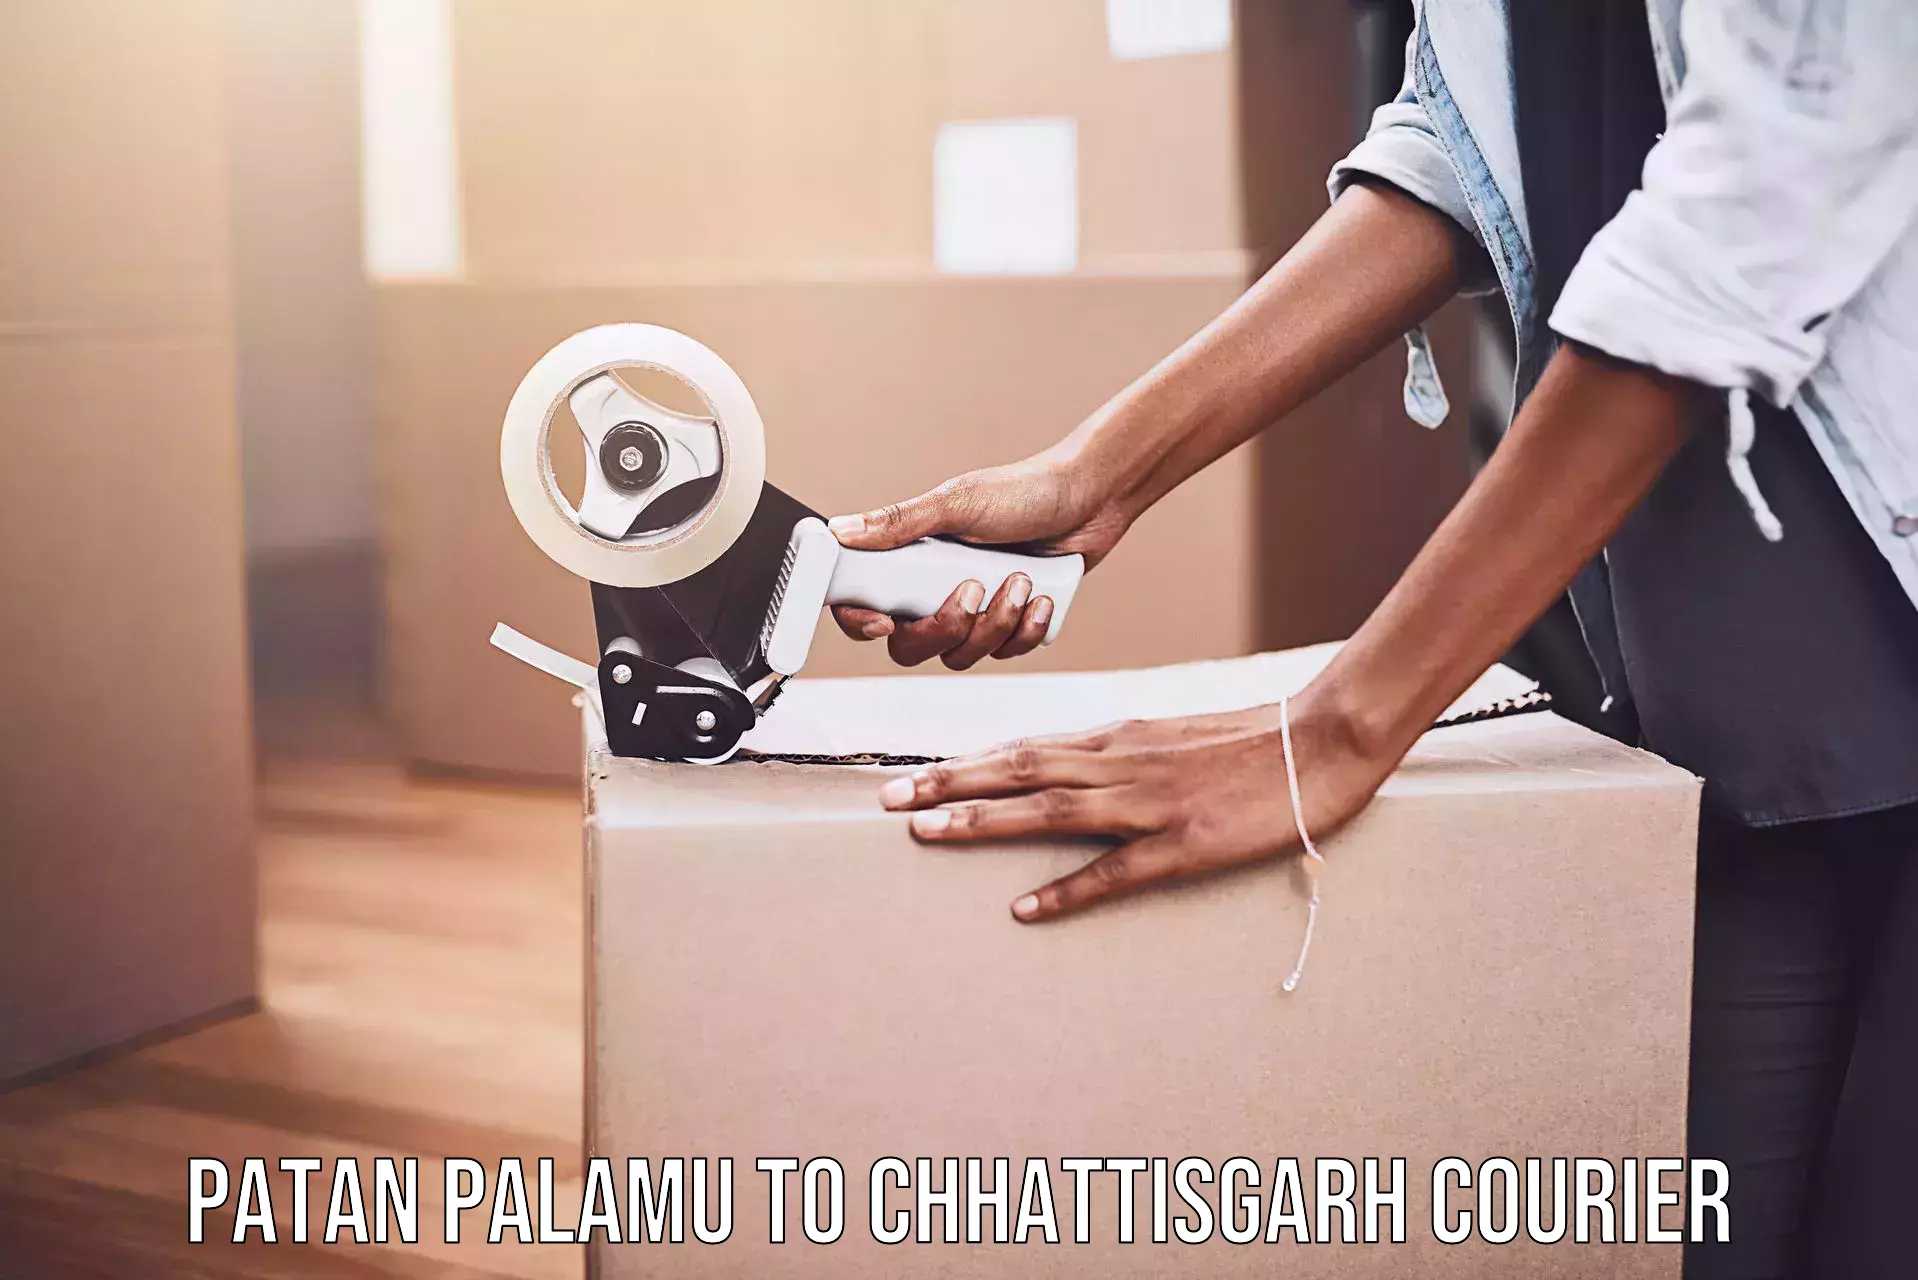 Global courier networks Patan Palamu to Chhattisgarh